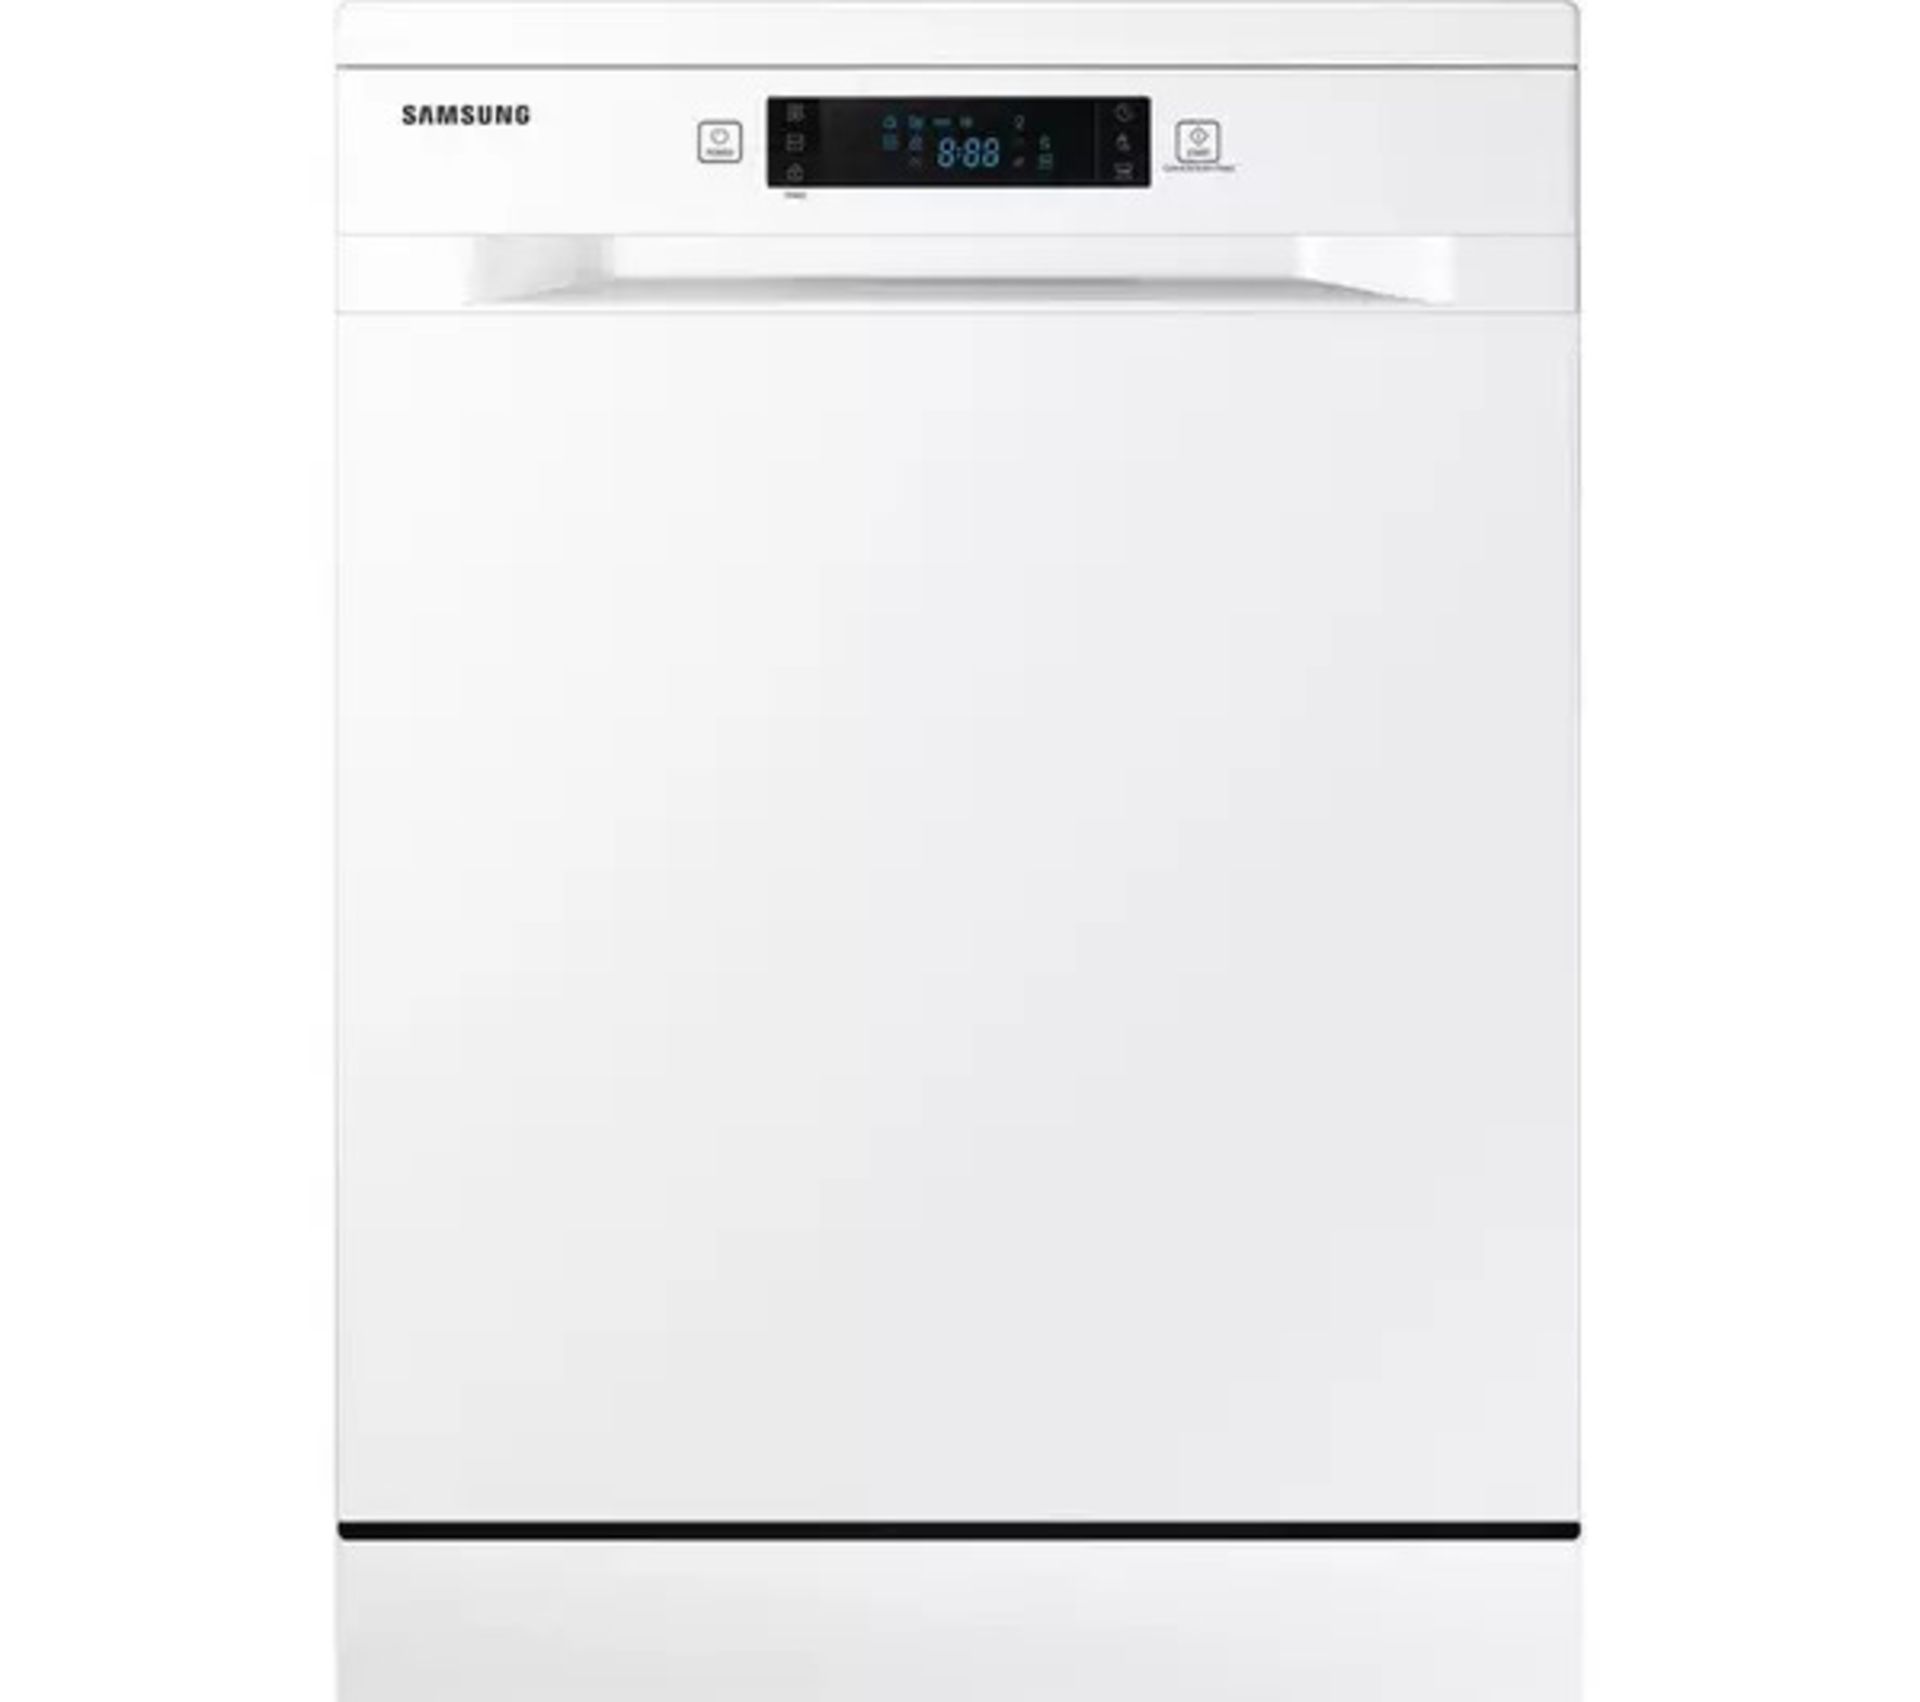 + VAT Grade B ISP £345 - Samsung Series 5 DW60M5050FW Full Size Dishwasher - 13 Place Settings - 60